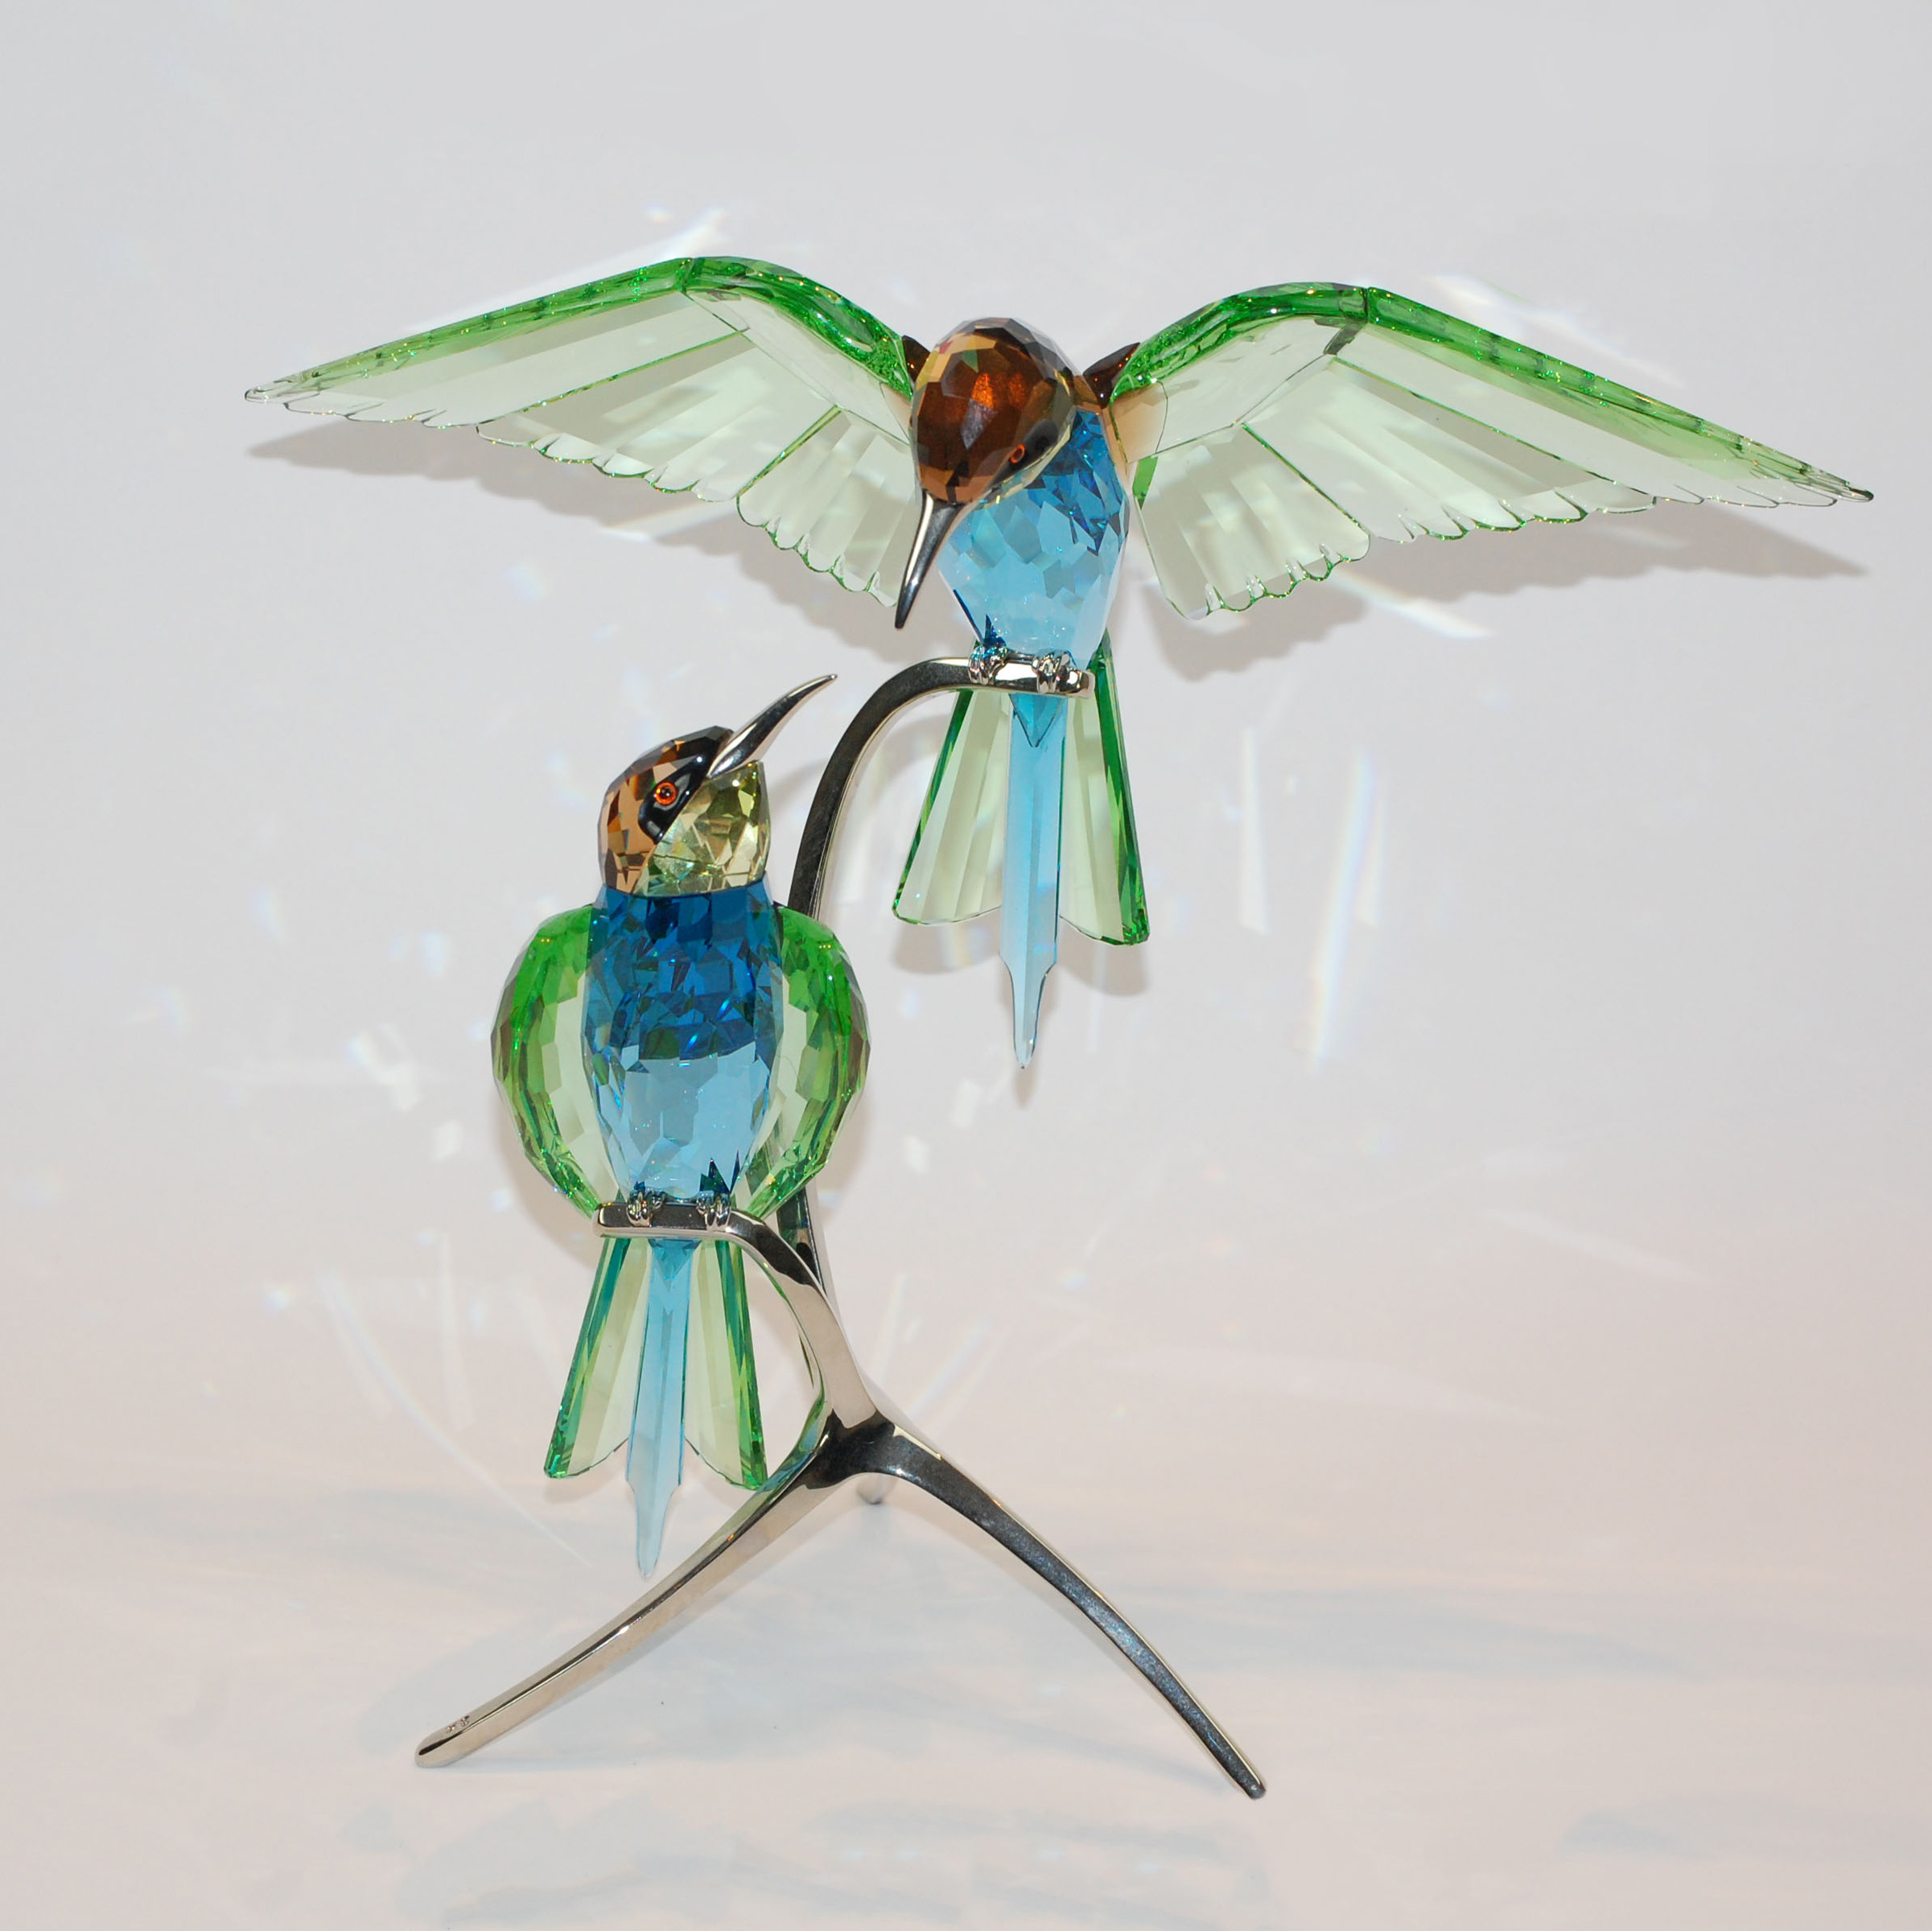 Swarovski Crystal Hummingbirds, early 21st century